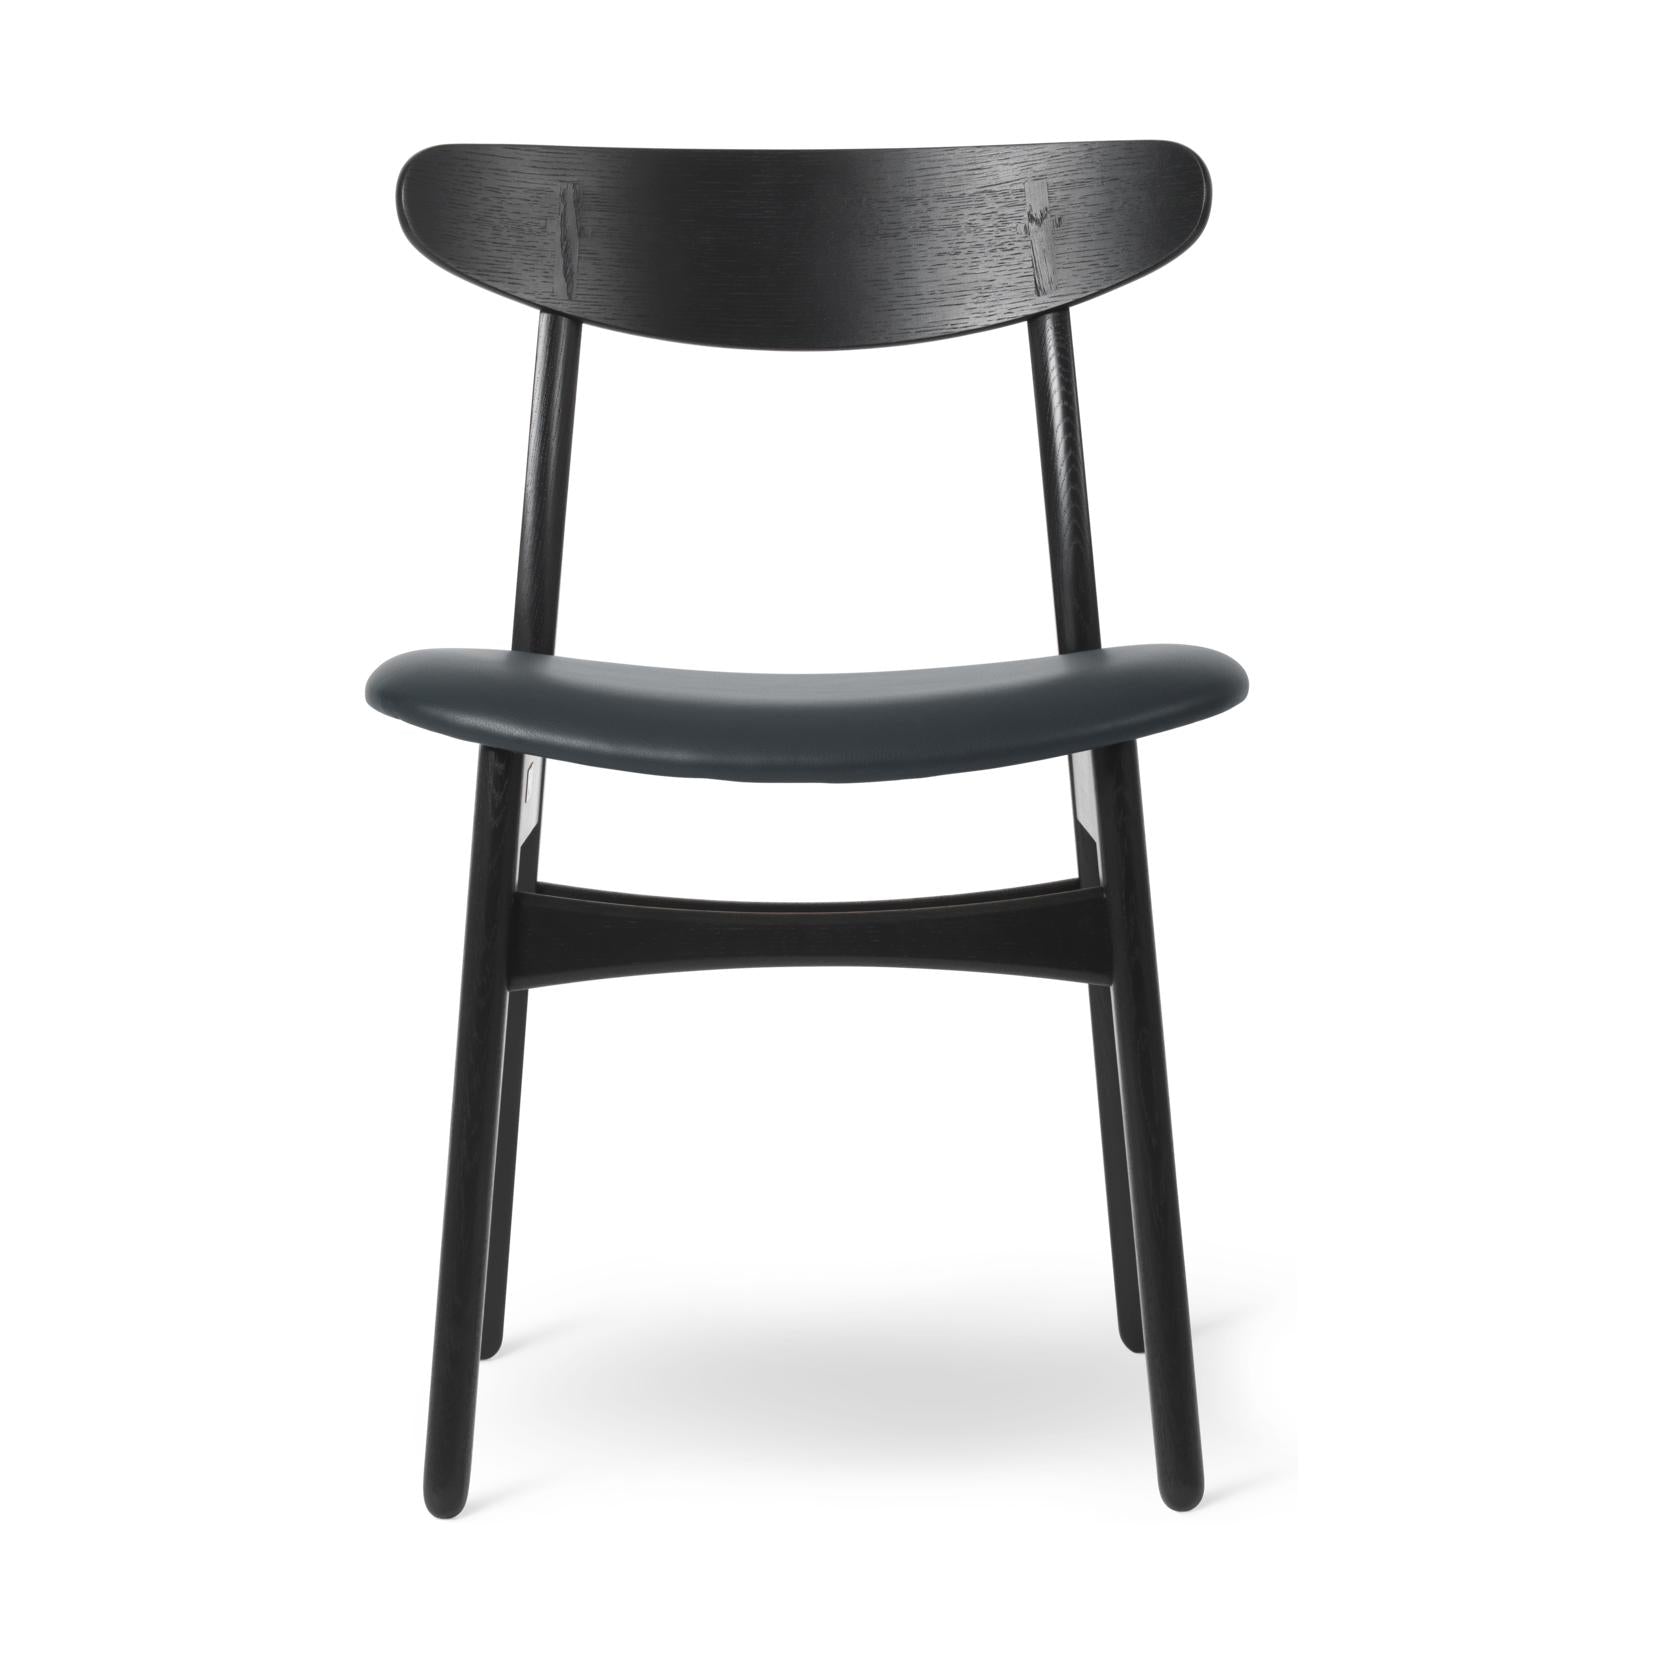 Carl Hansen Ch30p -stol, farget eik, mørkeblå skinn